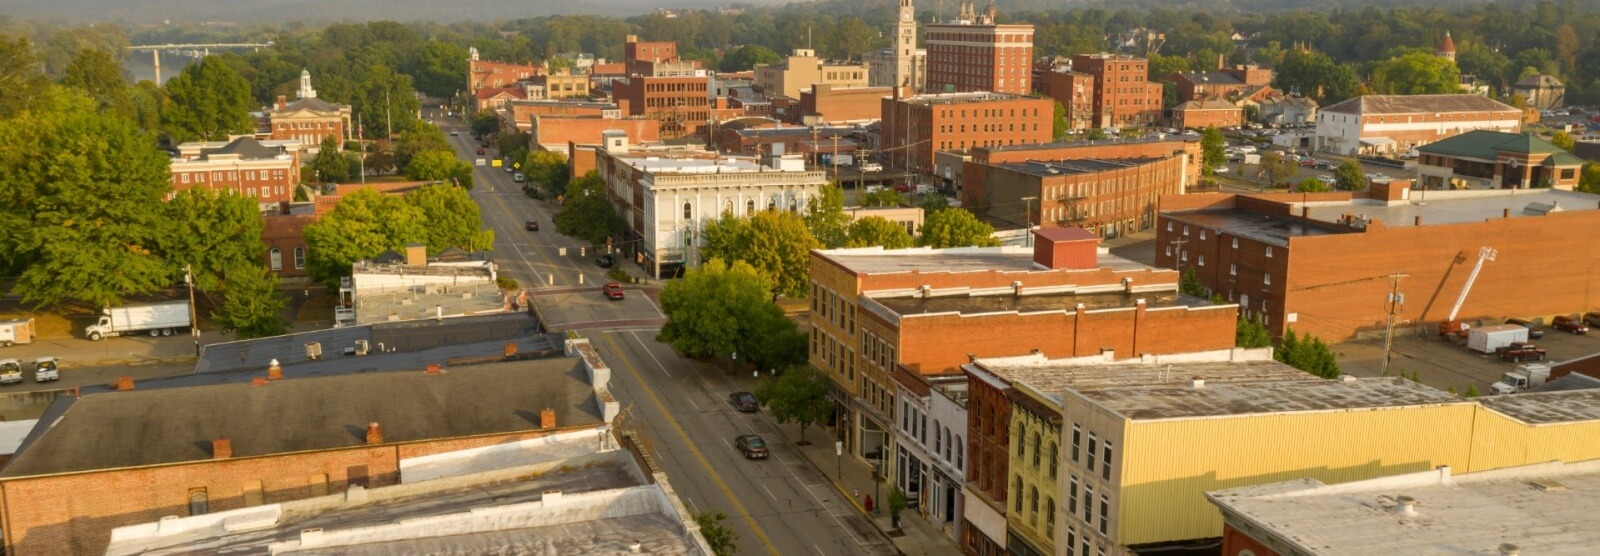 Downtown aerial view of Marietta Ohio